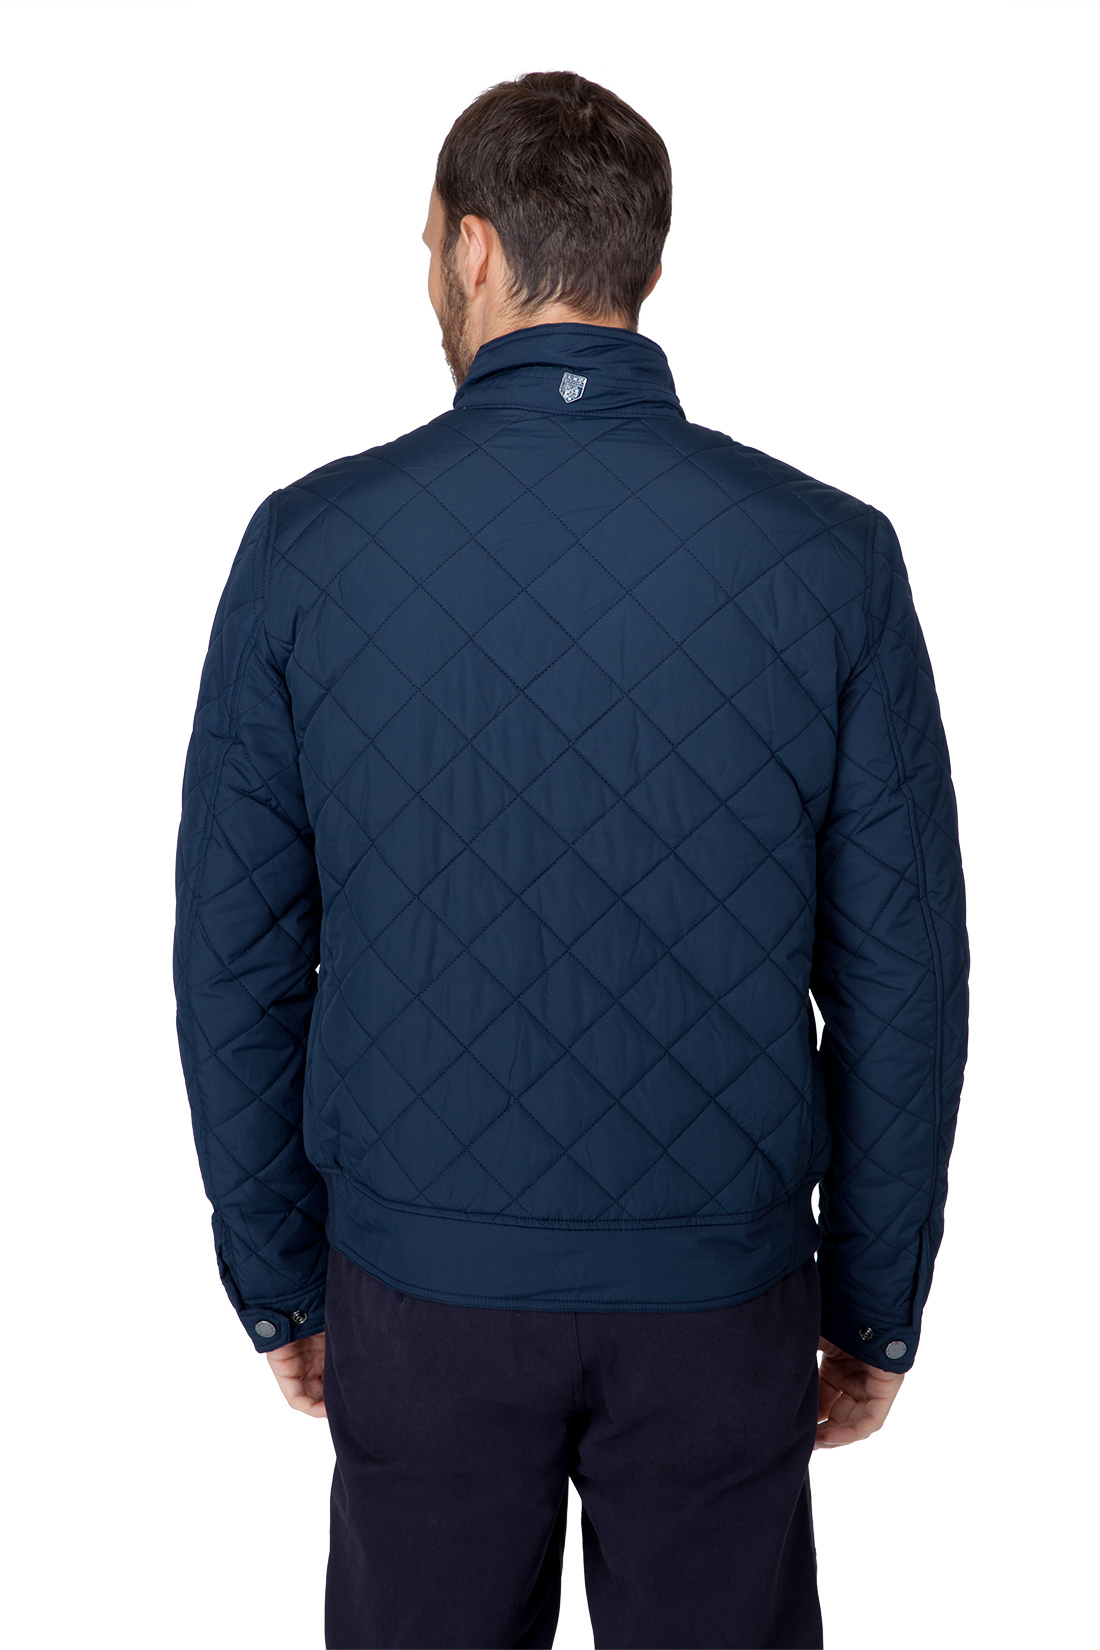 Стёганая куртка с резинкой-рибана (арт. baon B537018), размер XL, цвет синий Стёганая куртка с резинкой-рибана (арт. baon B537018) - фото 2